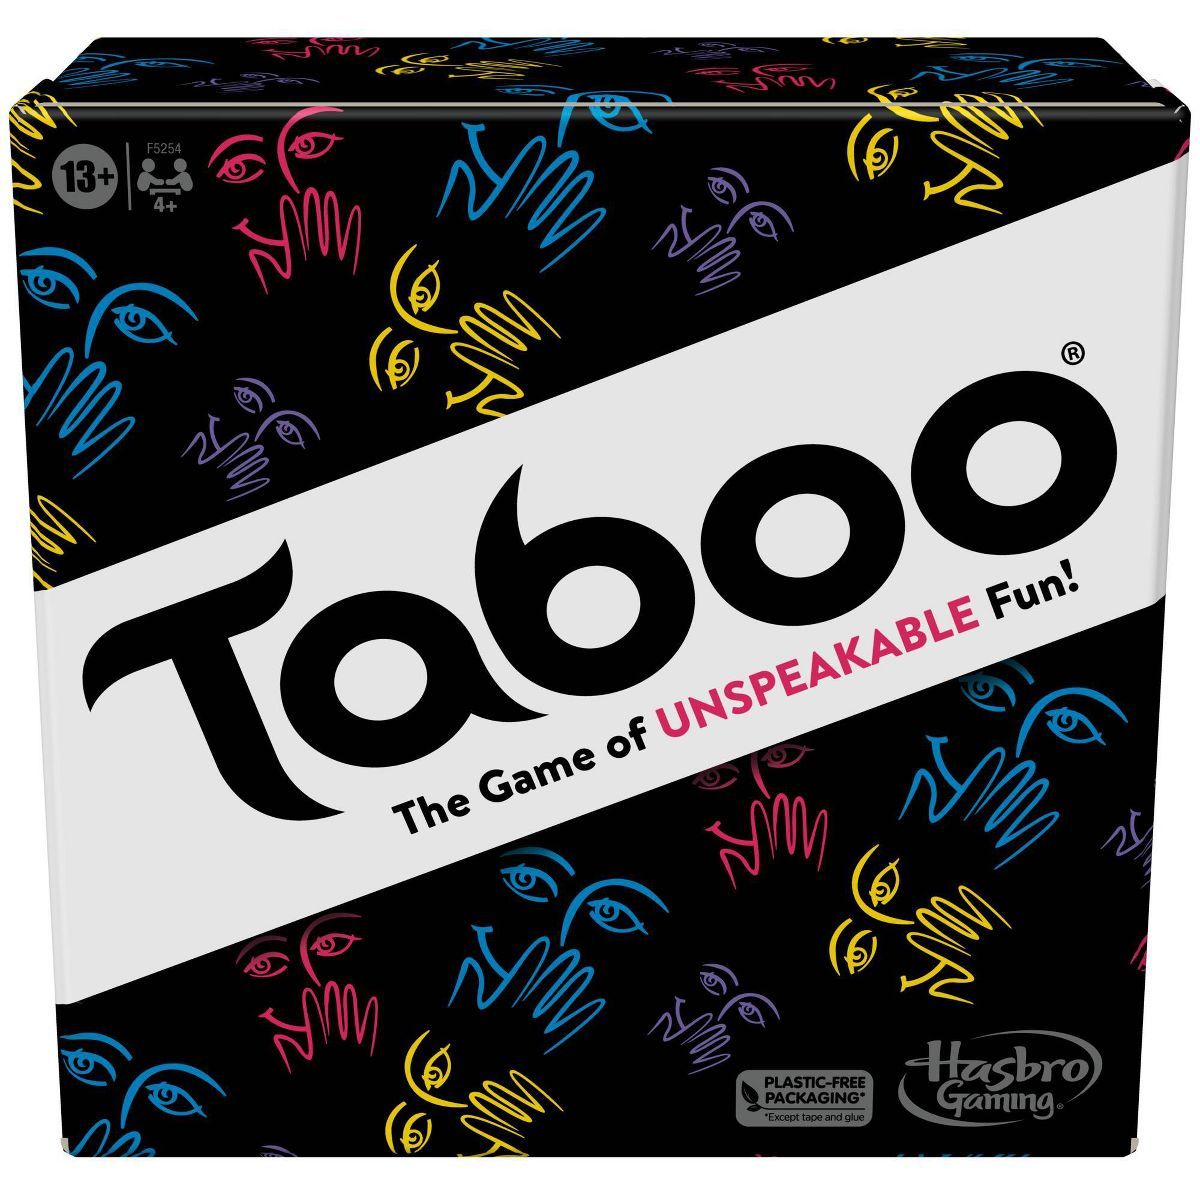 Taboo Game | Target